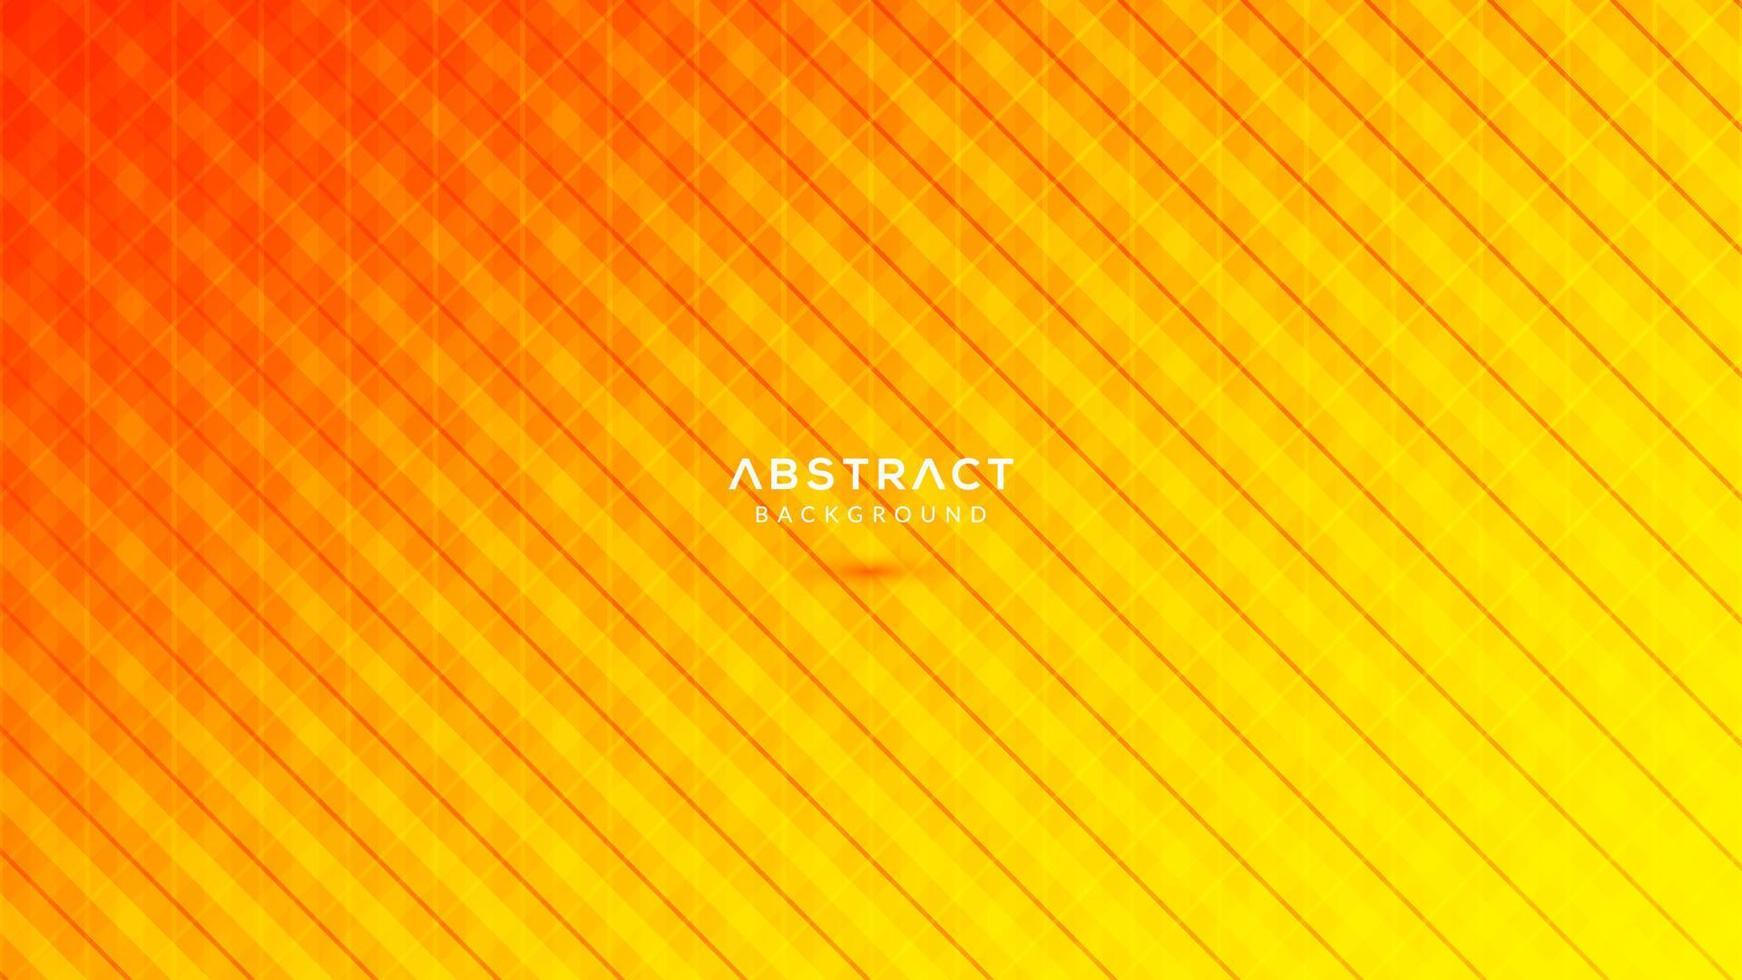 abstrakt orange och gul geometrisk bakgrund vektor